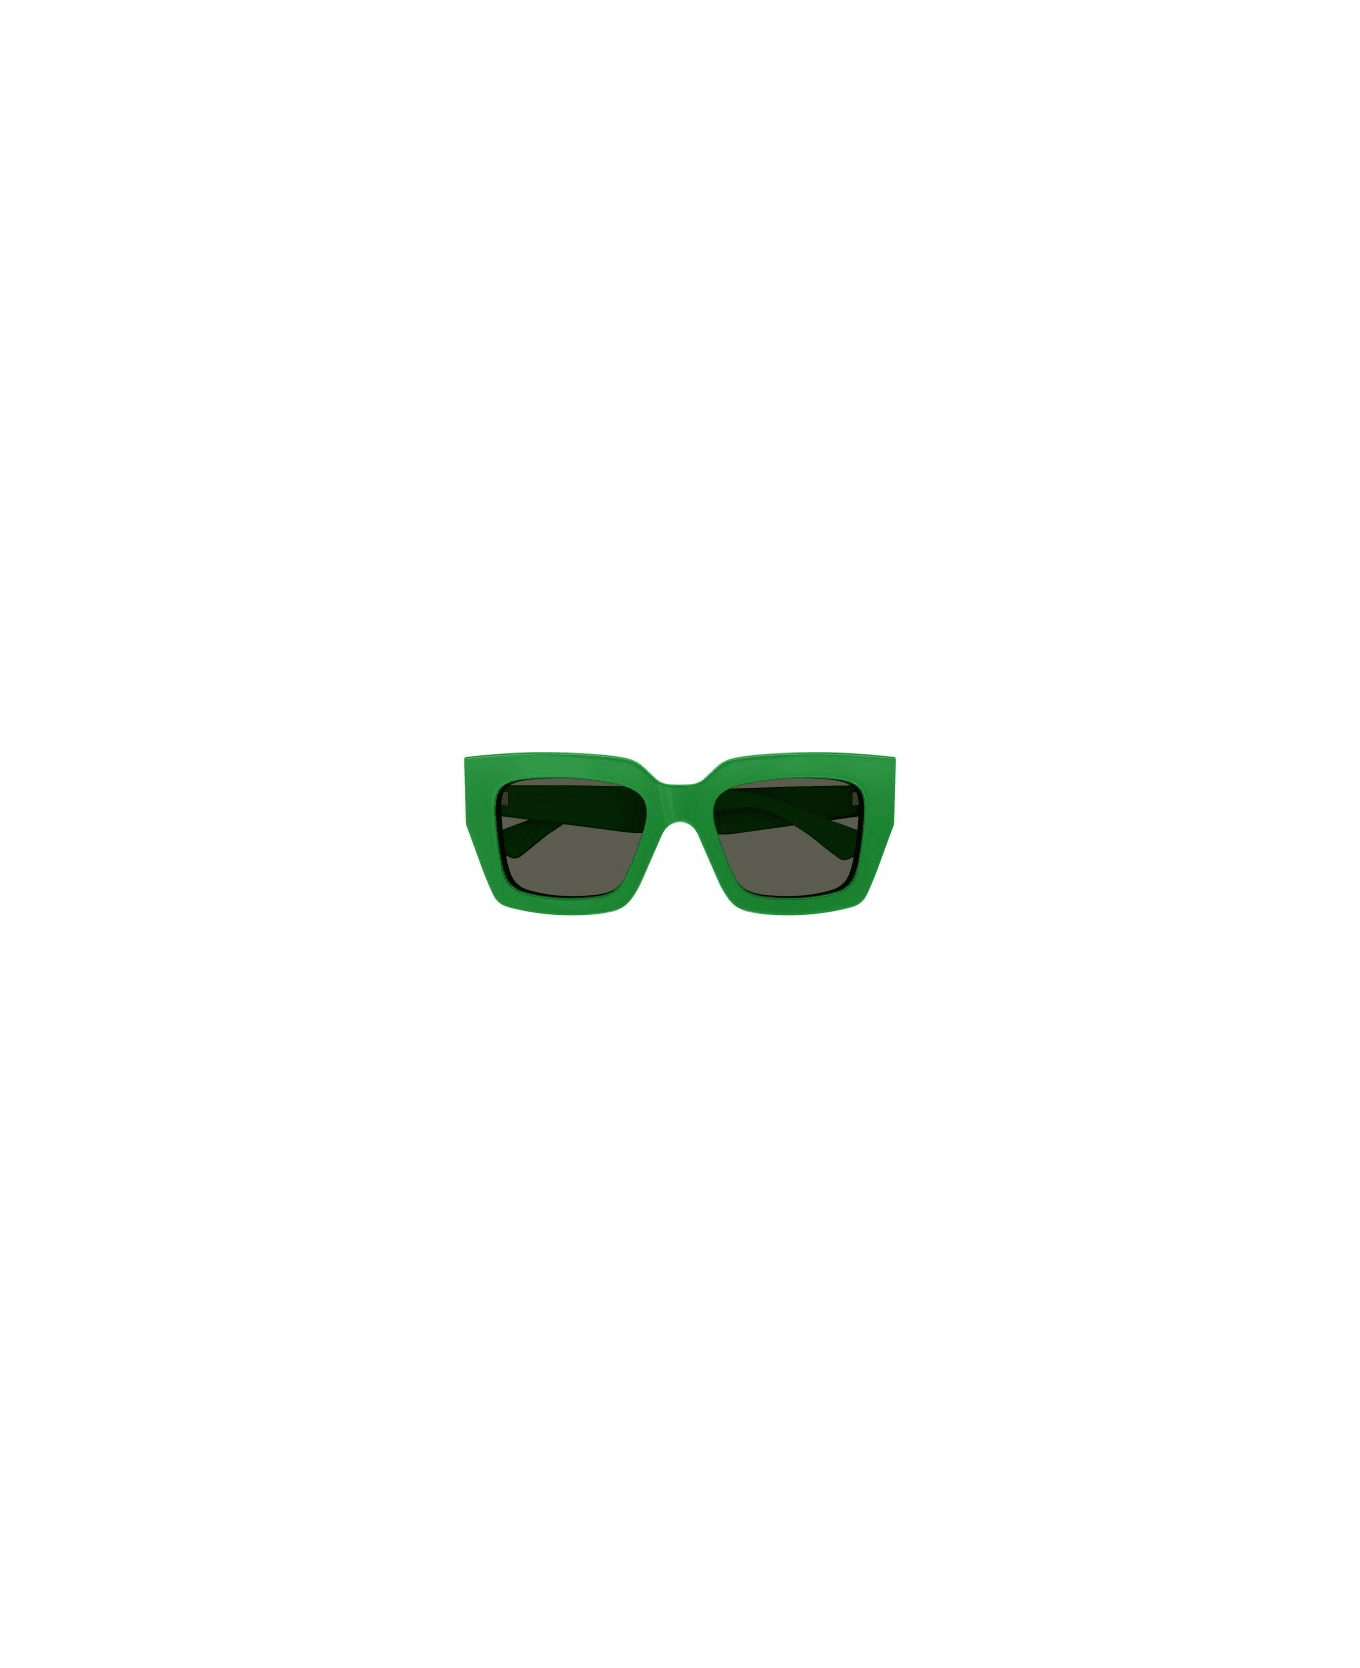 Bottega Veneta Eyewear 1fr54mg0a - 003 green green green